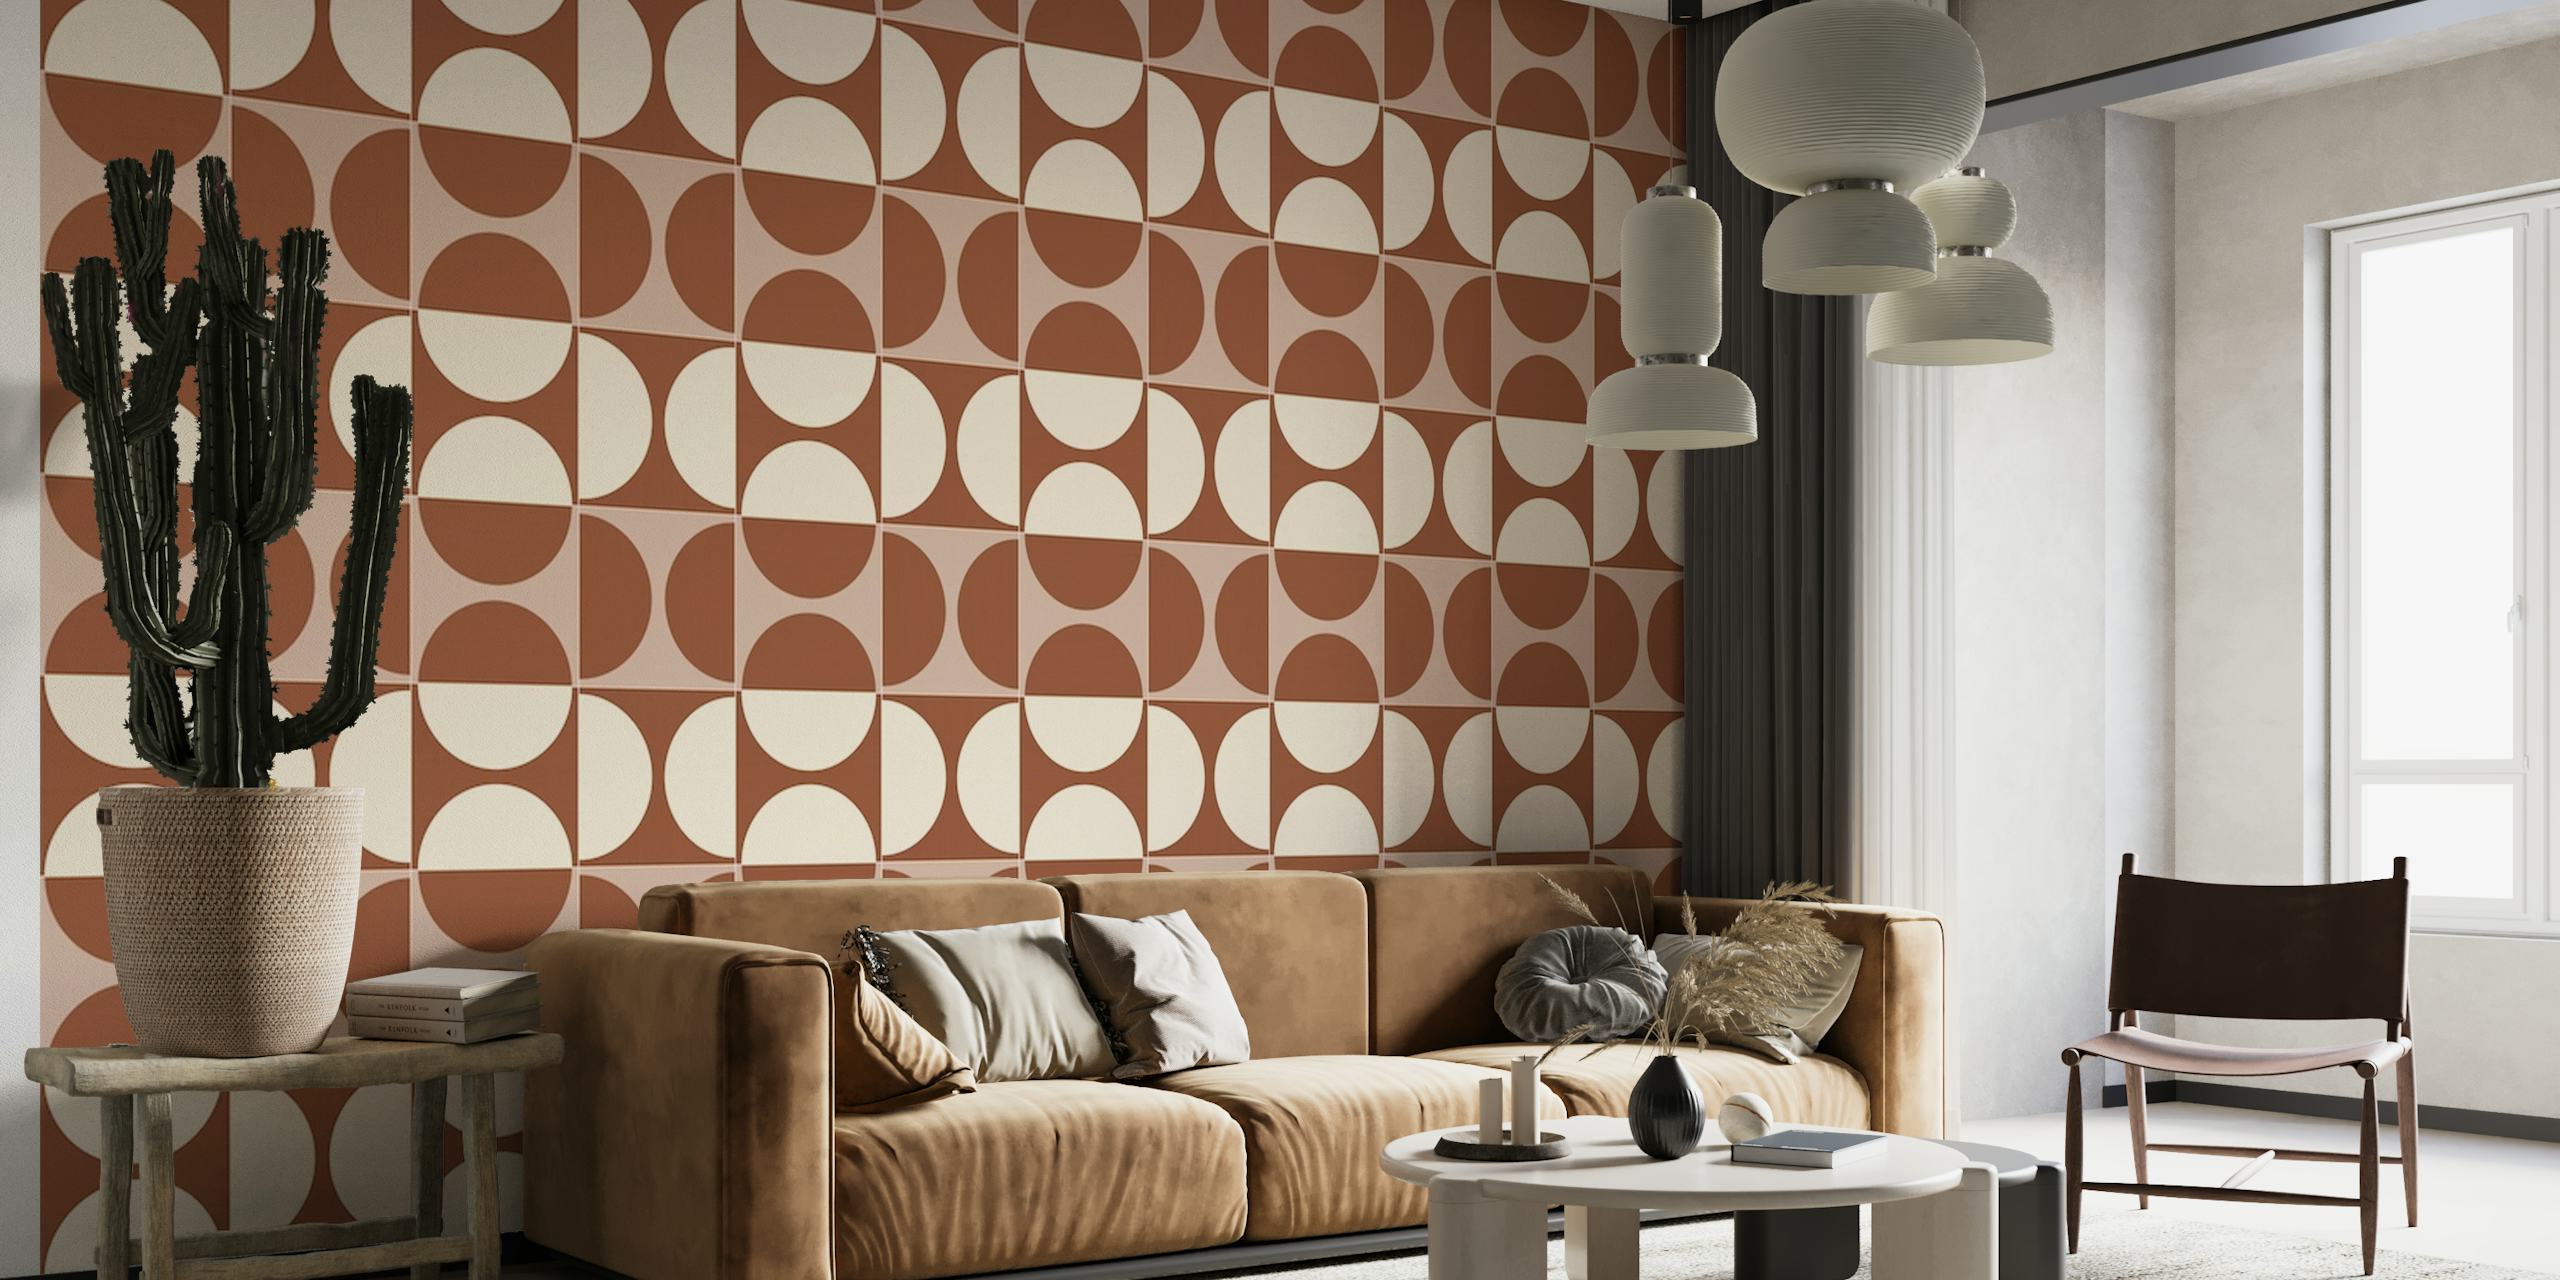 Cotto Tiles Cinnamon and Cream Combo Lines papel de parede